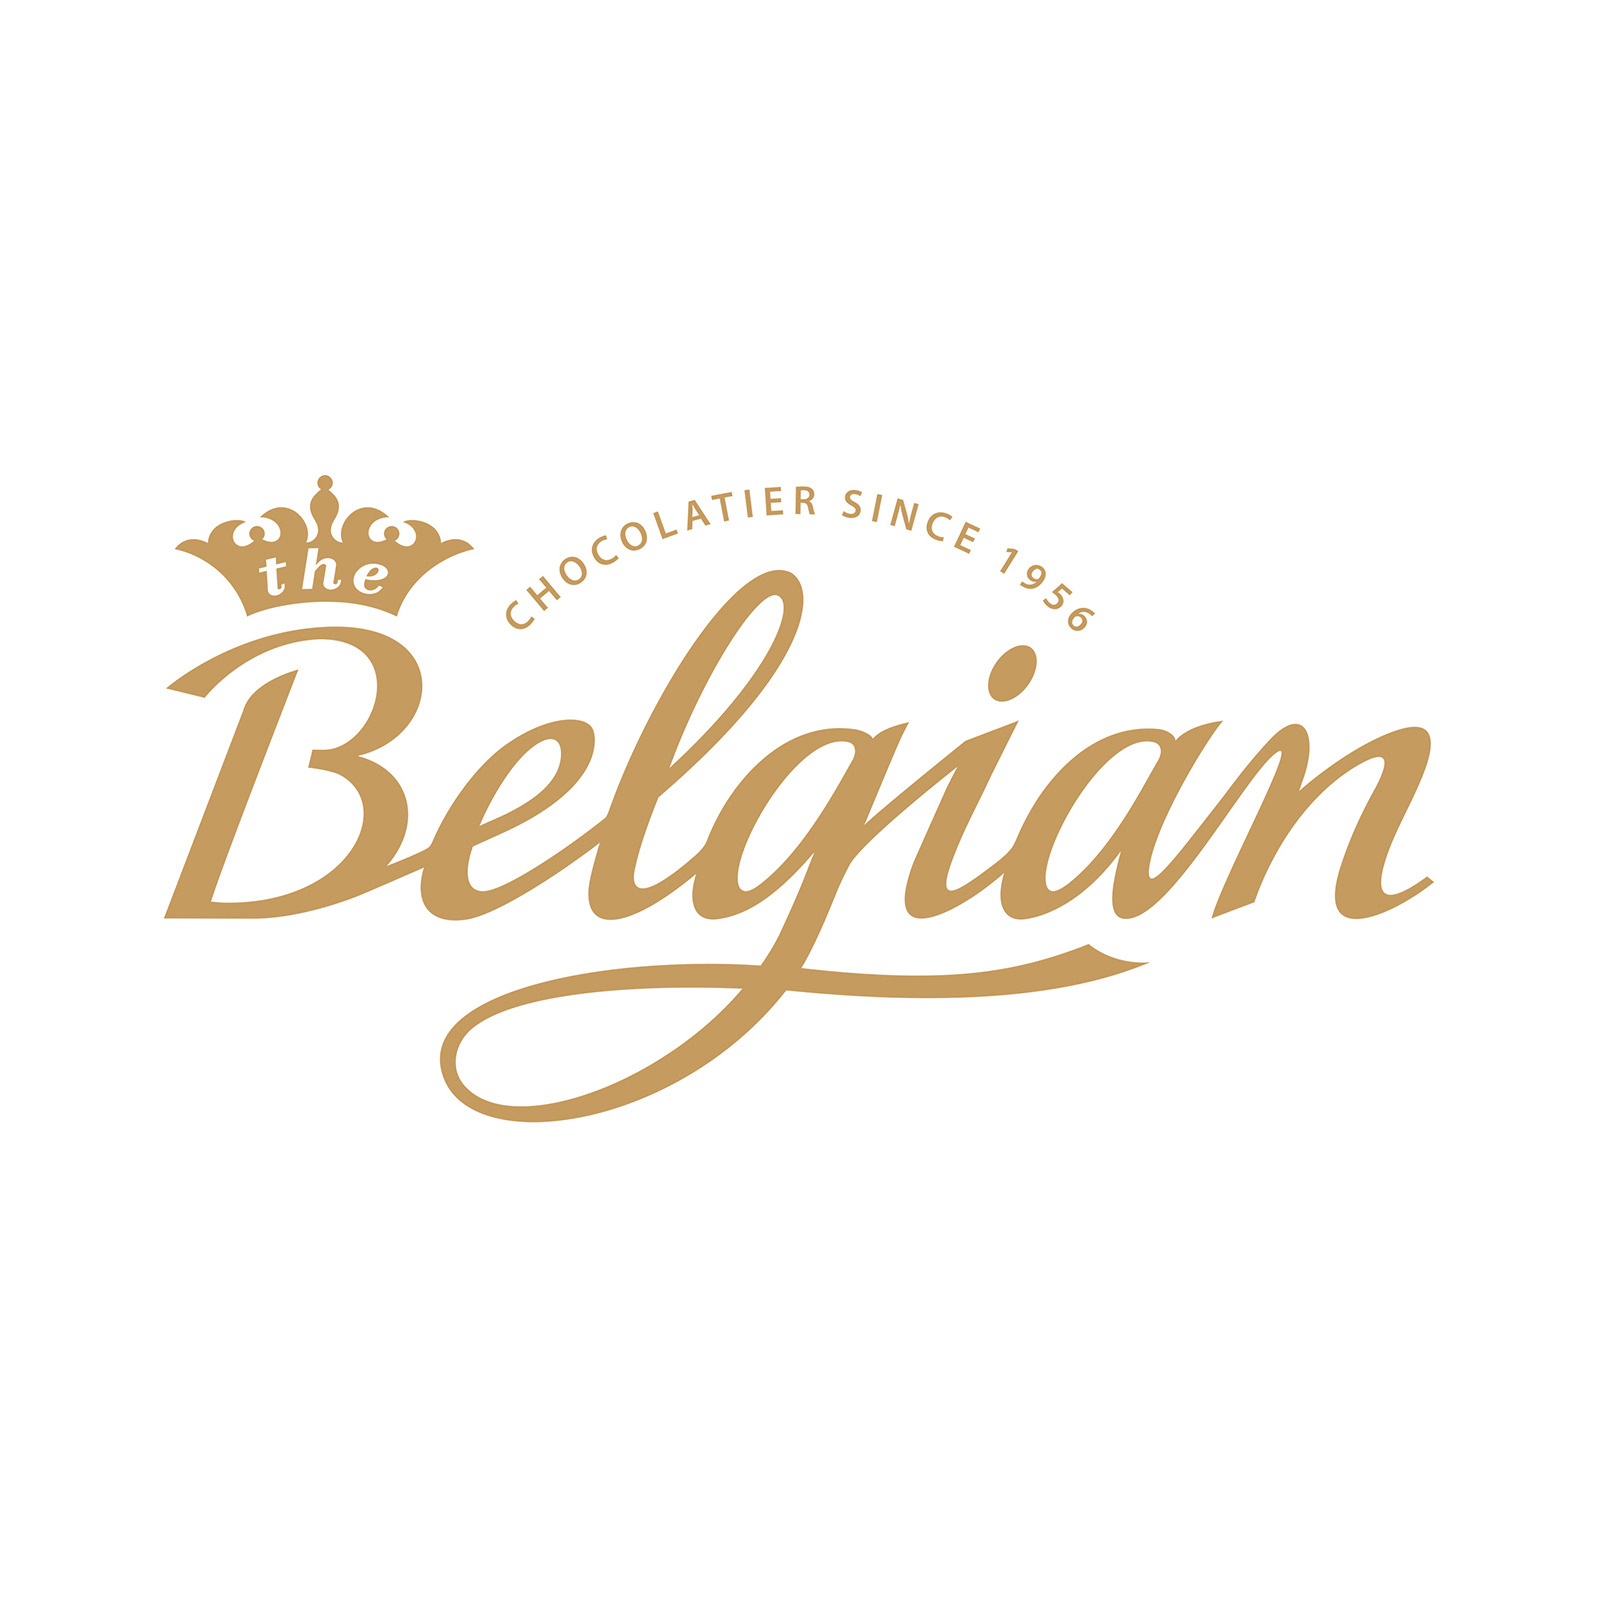 thebelgian-logo.jpg